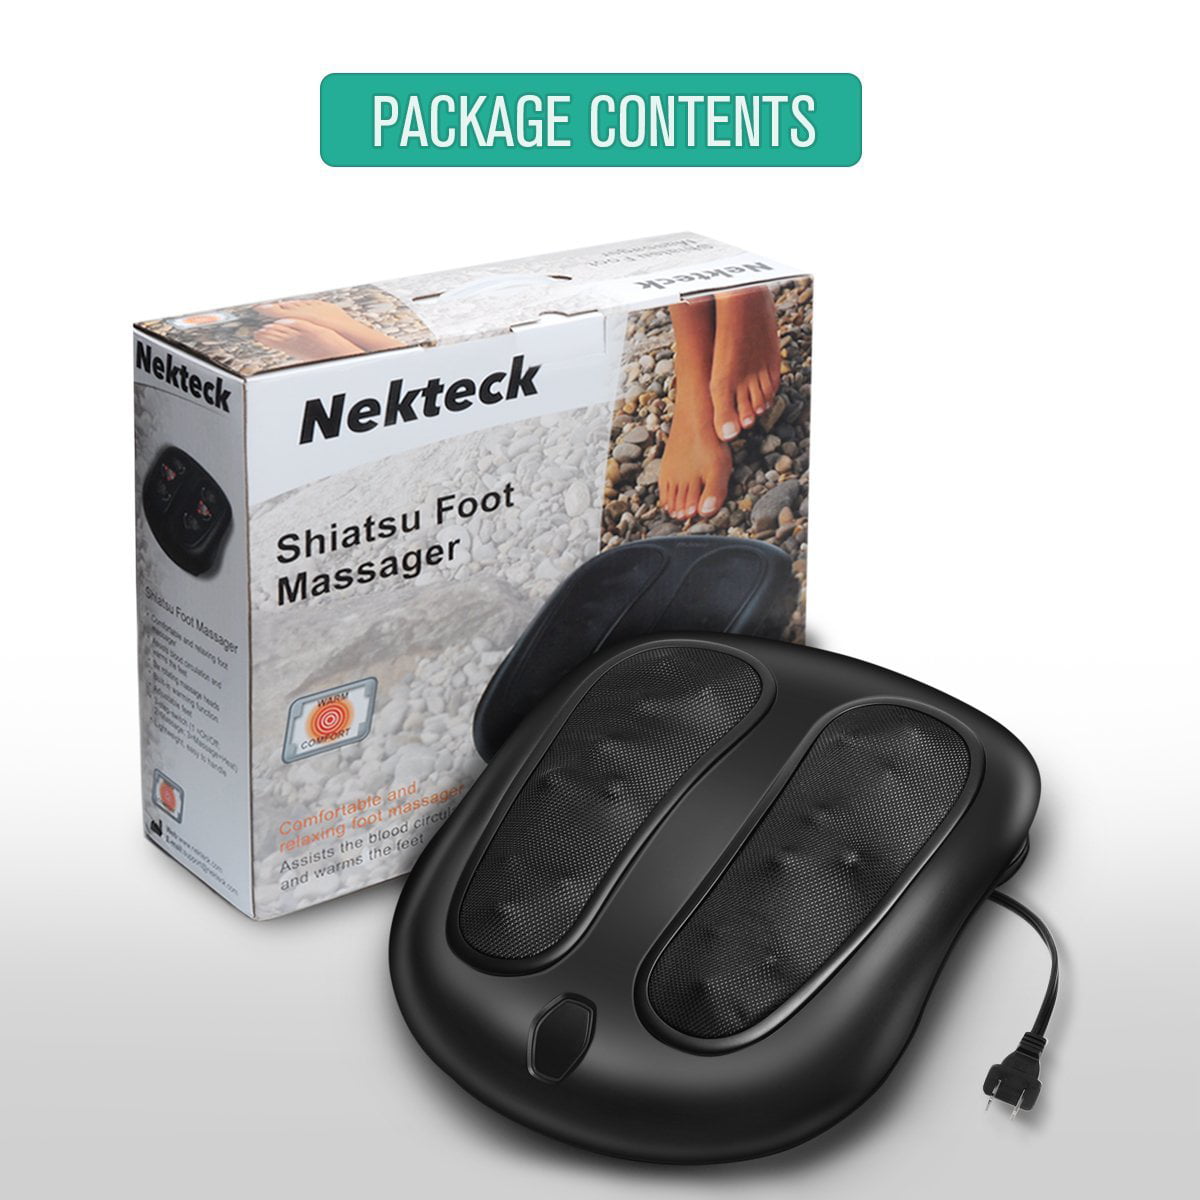 Nekteck Shiatsu Foot Massager Warmer-2-in-1 Foot and Back Massager